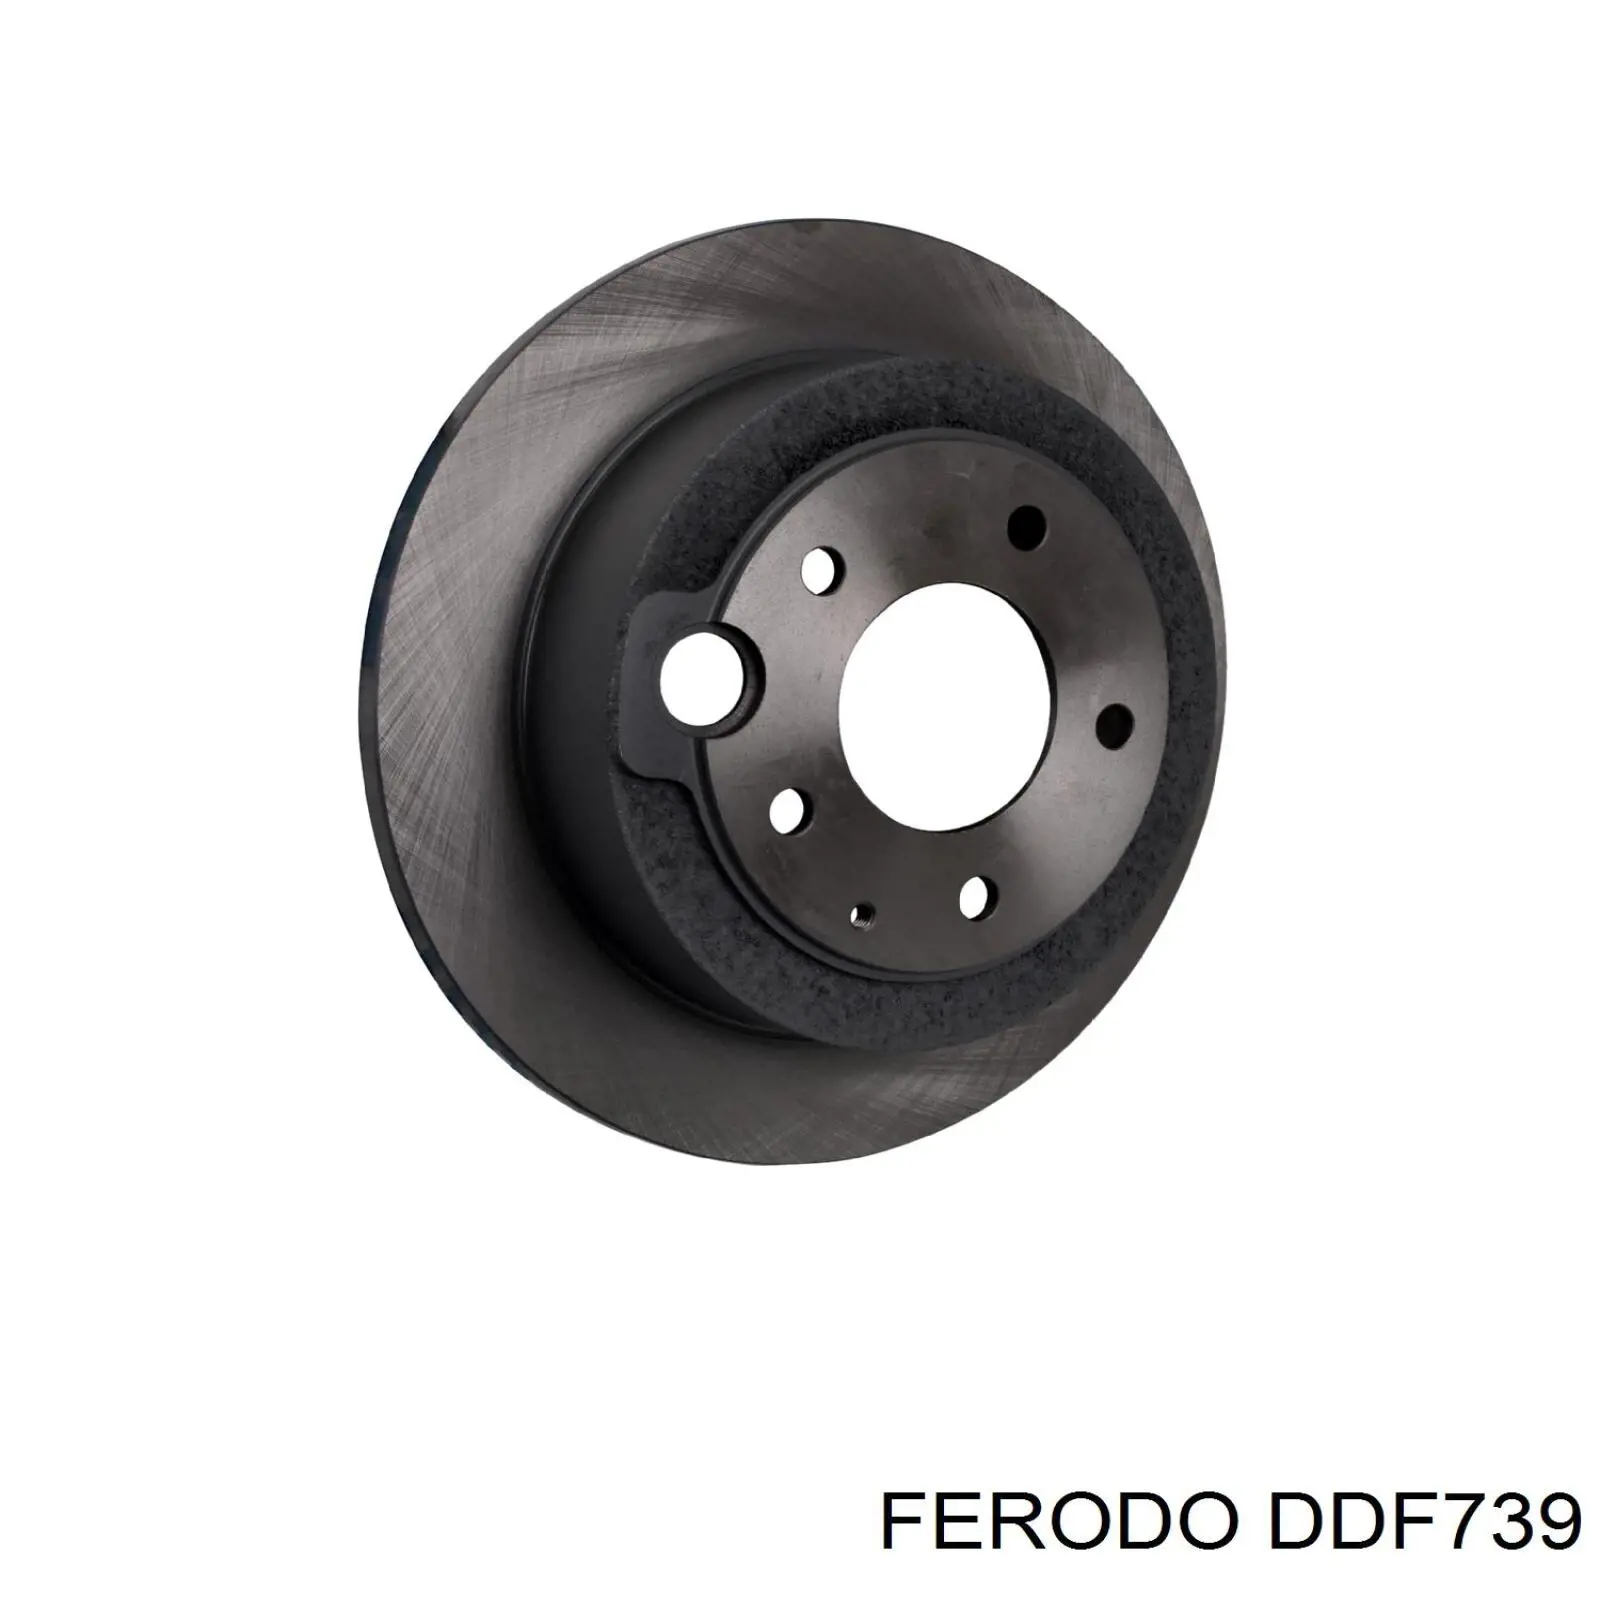 DDF739 Ferodo disco de freno trasero